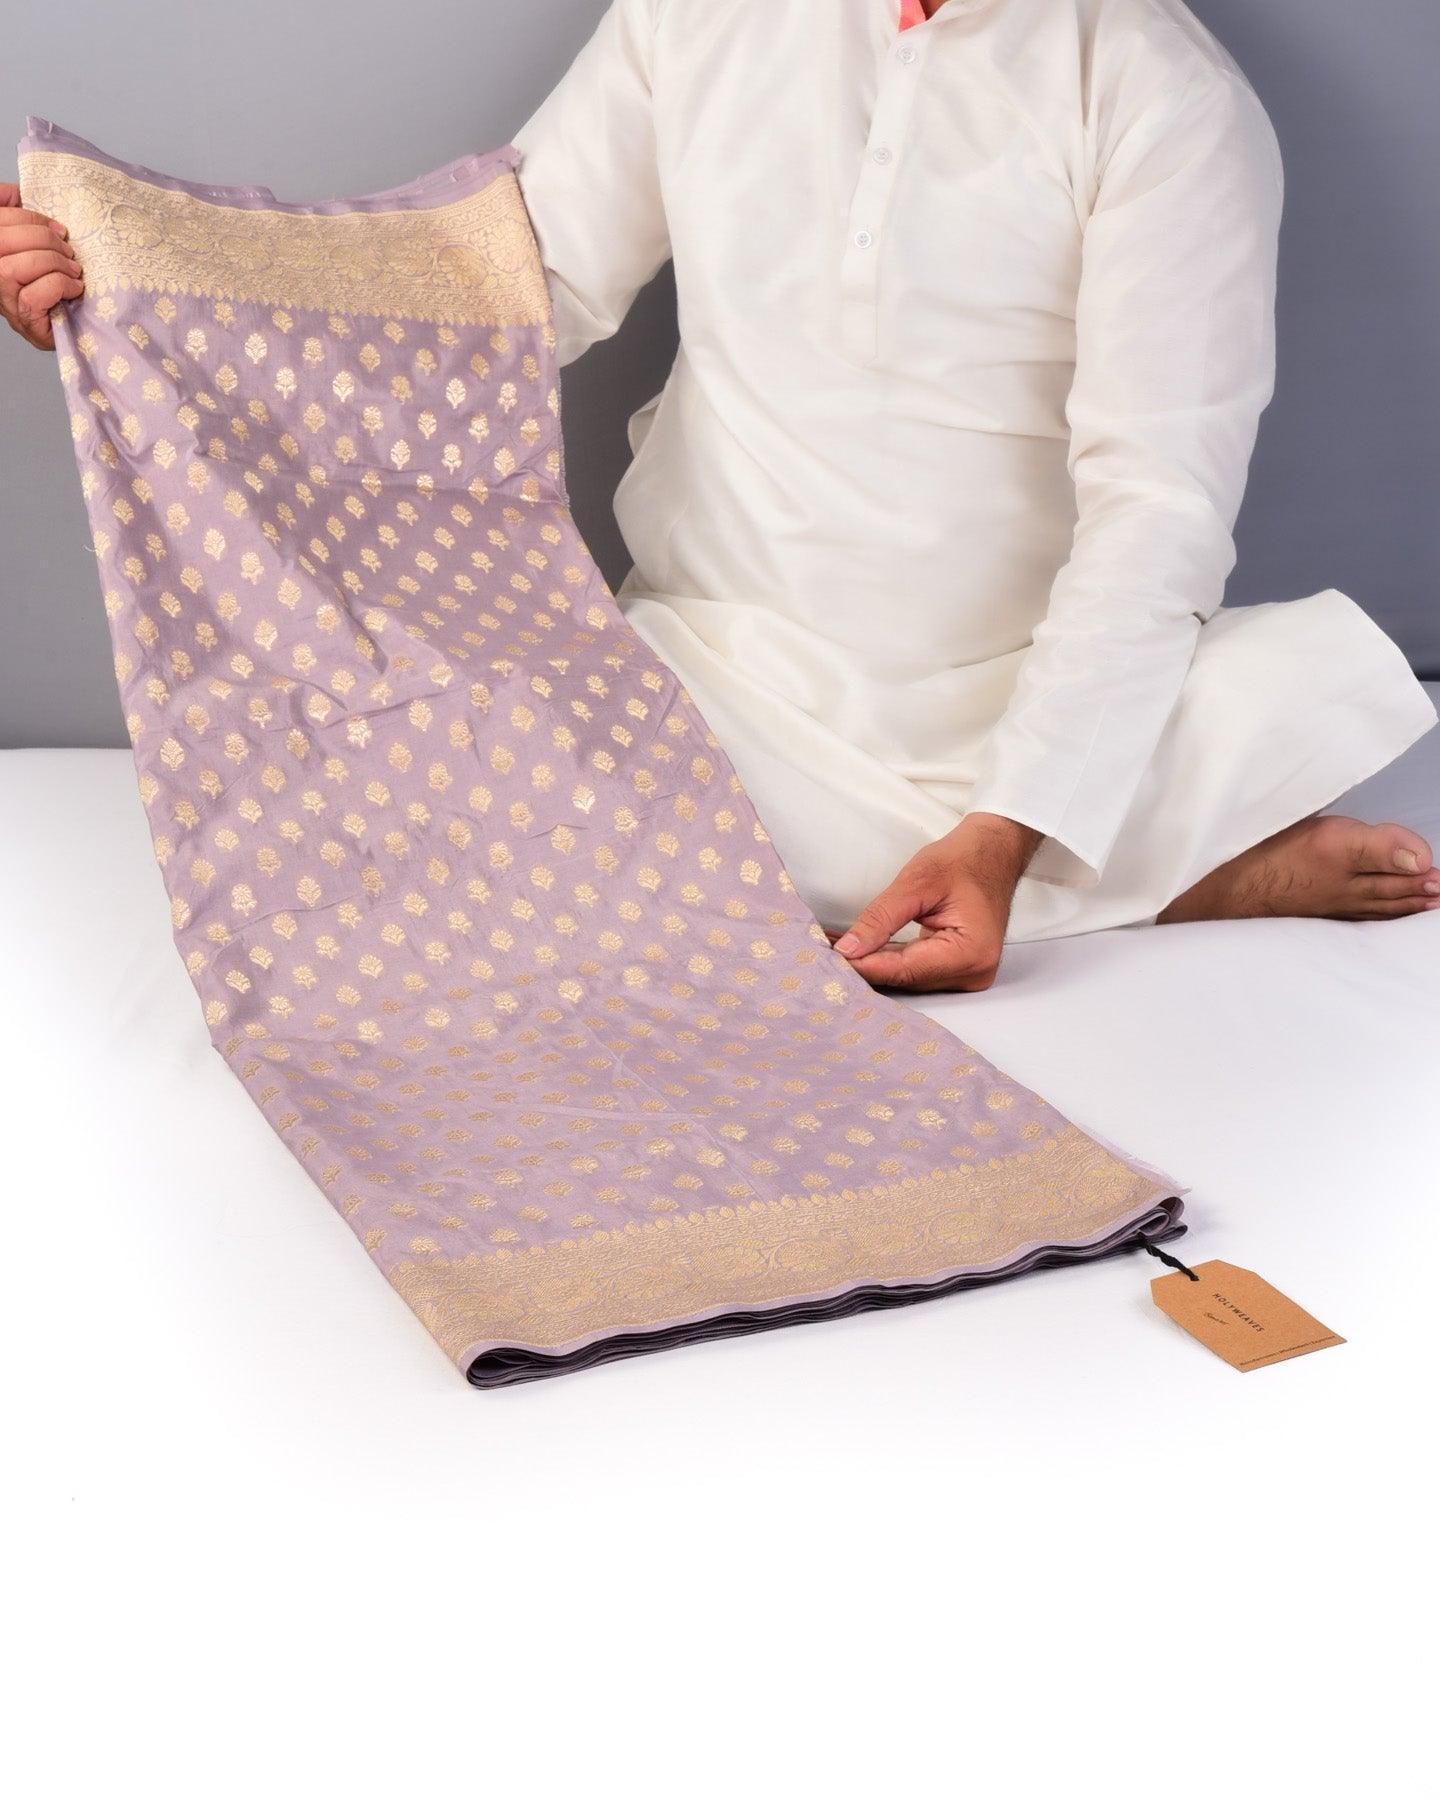 Rose Gray Banarasi Zari Buti Cutwork Brocade Handwoven Katan Silk Saree - By HolyWeaves, Benares